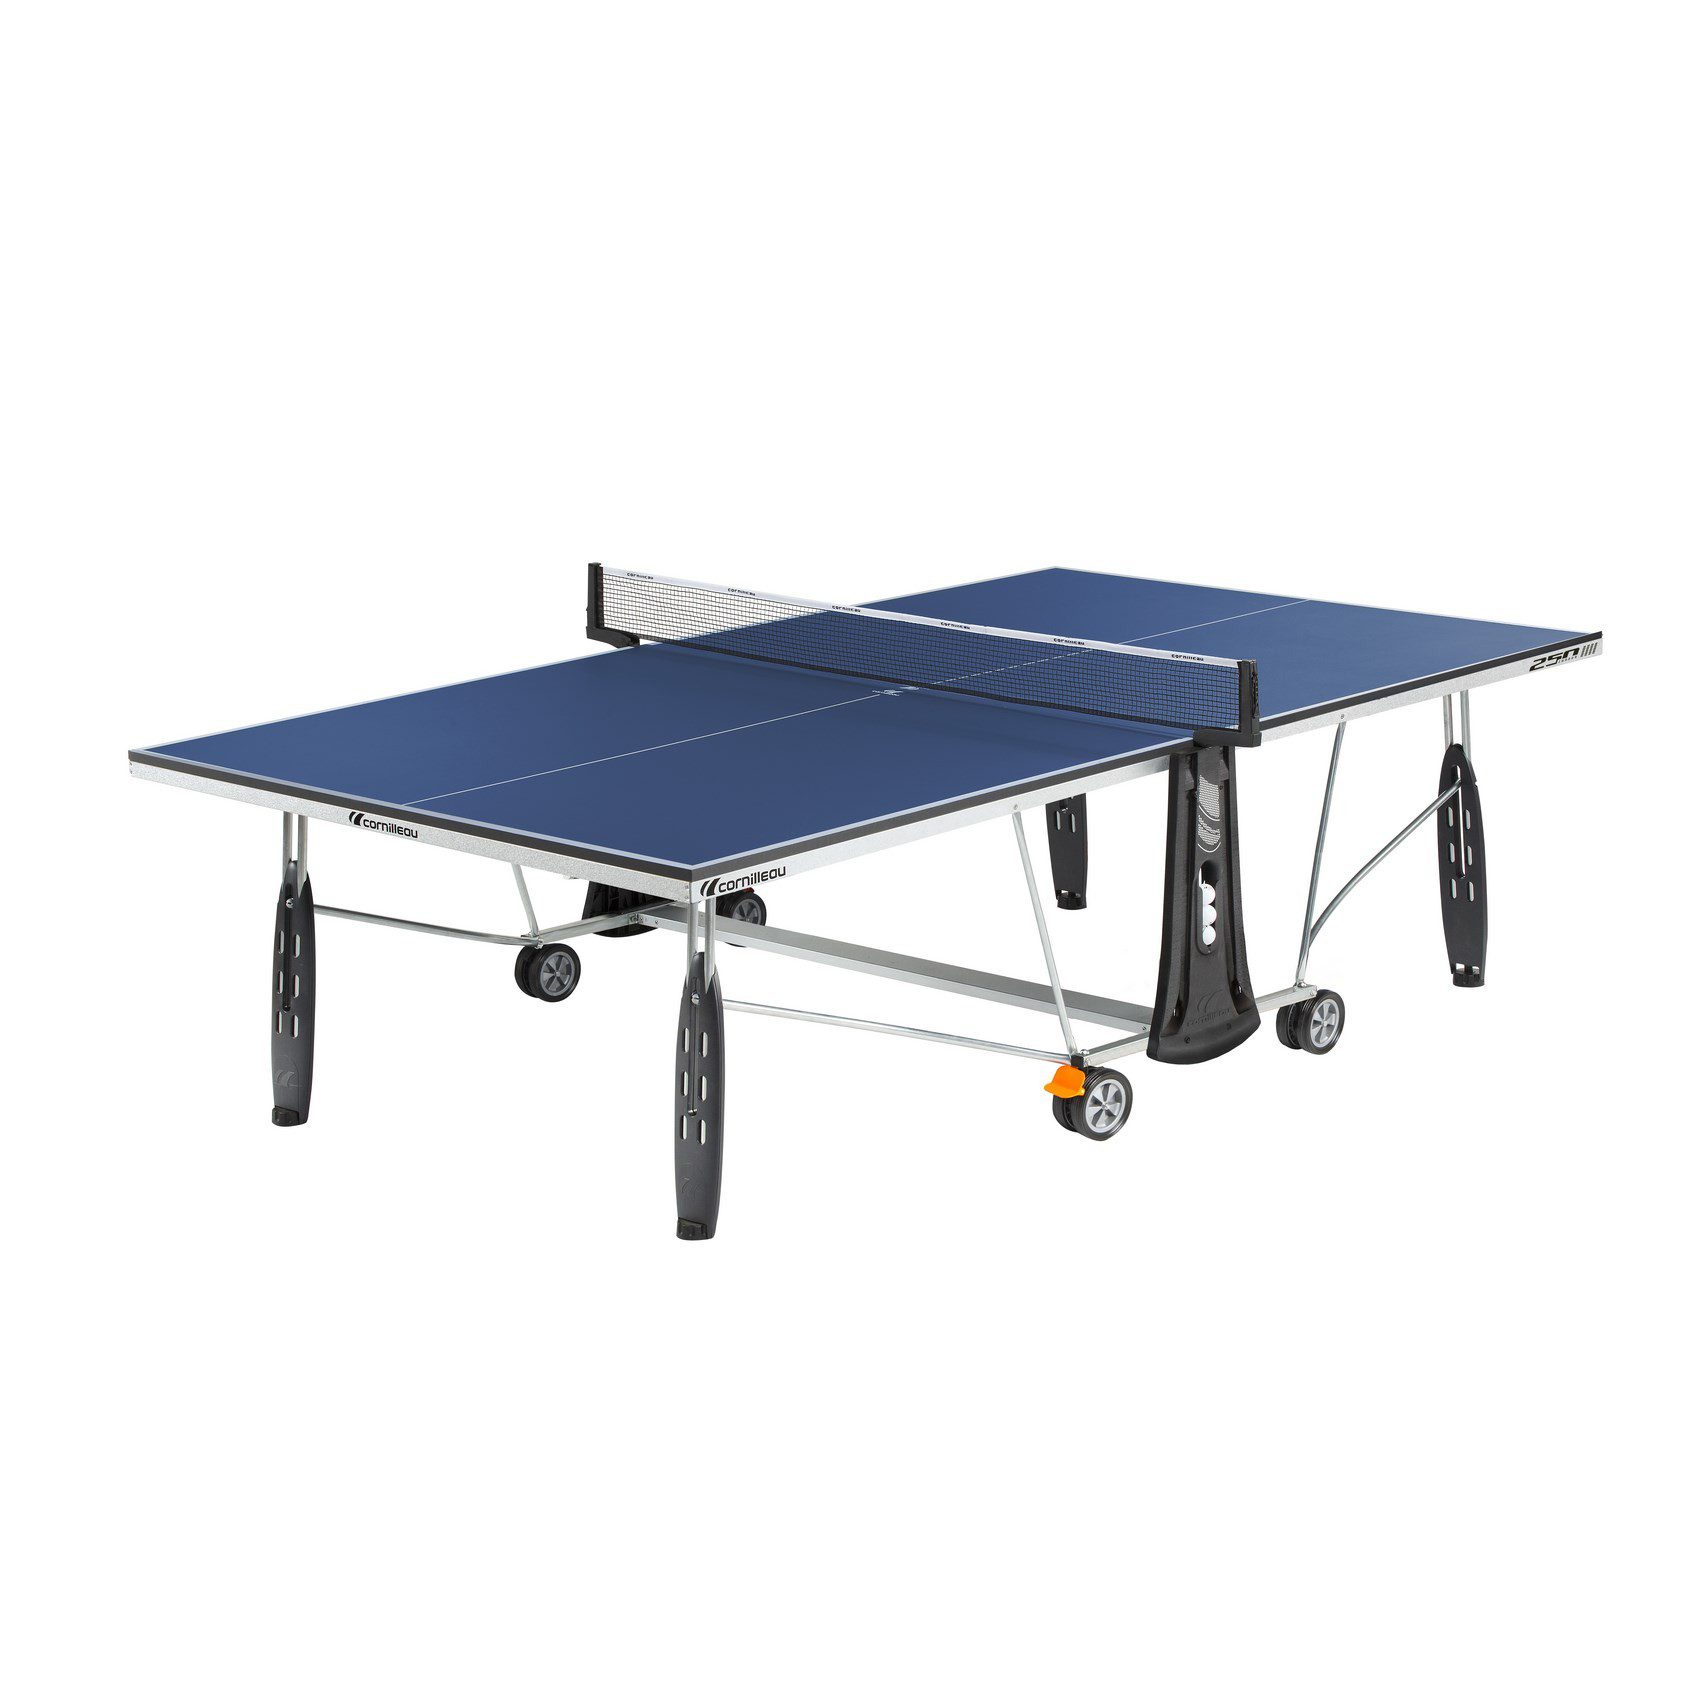 250 Table Tennis by Cornilleau